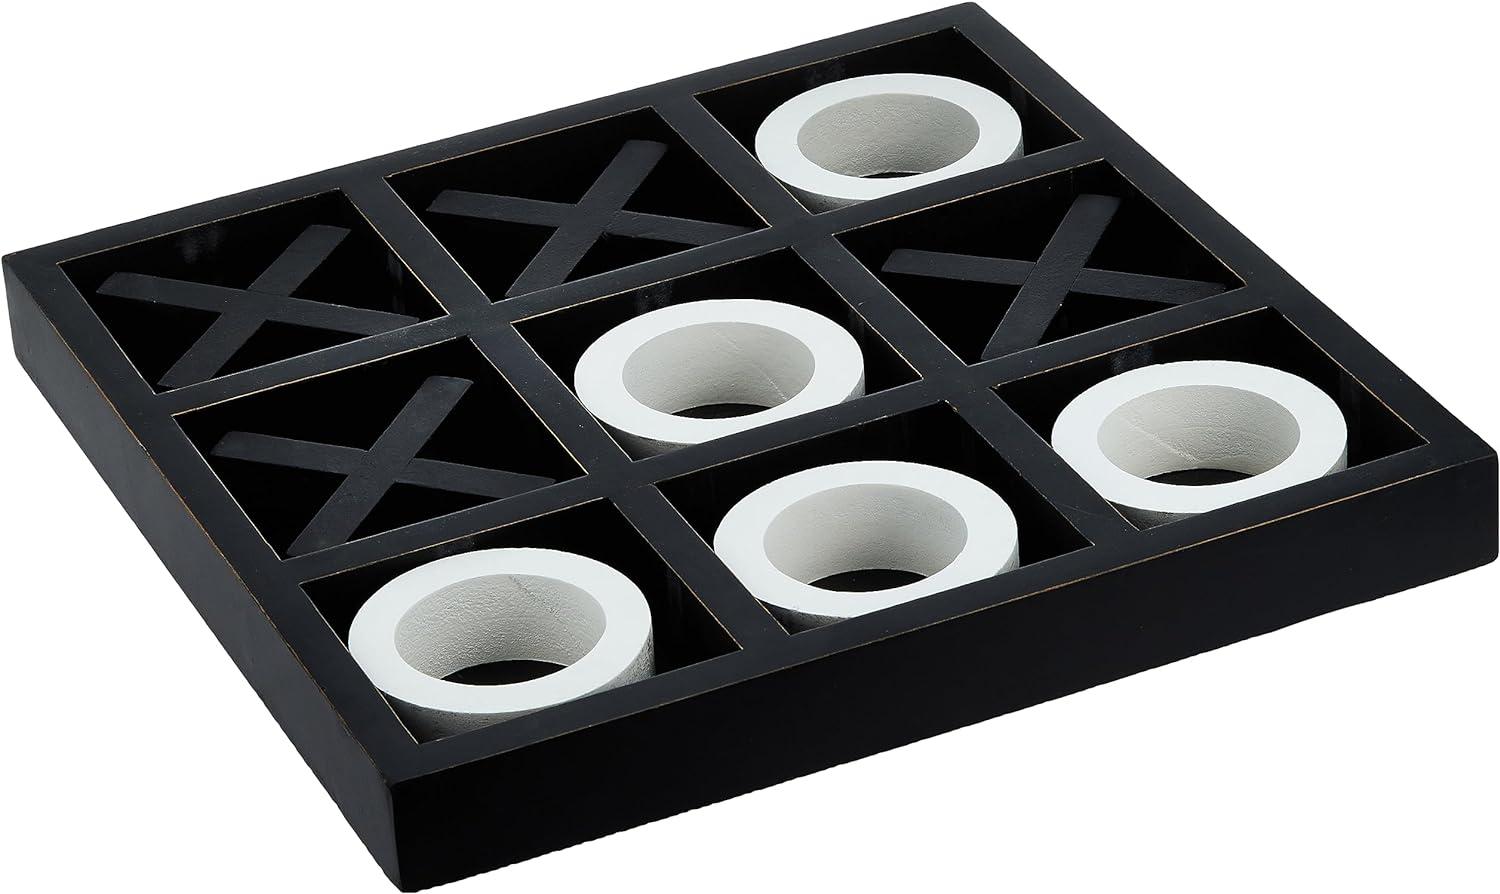 Black and White Geometric Tic Tac Toe Game Set, 14" x 14" x 2"